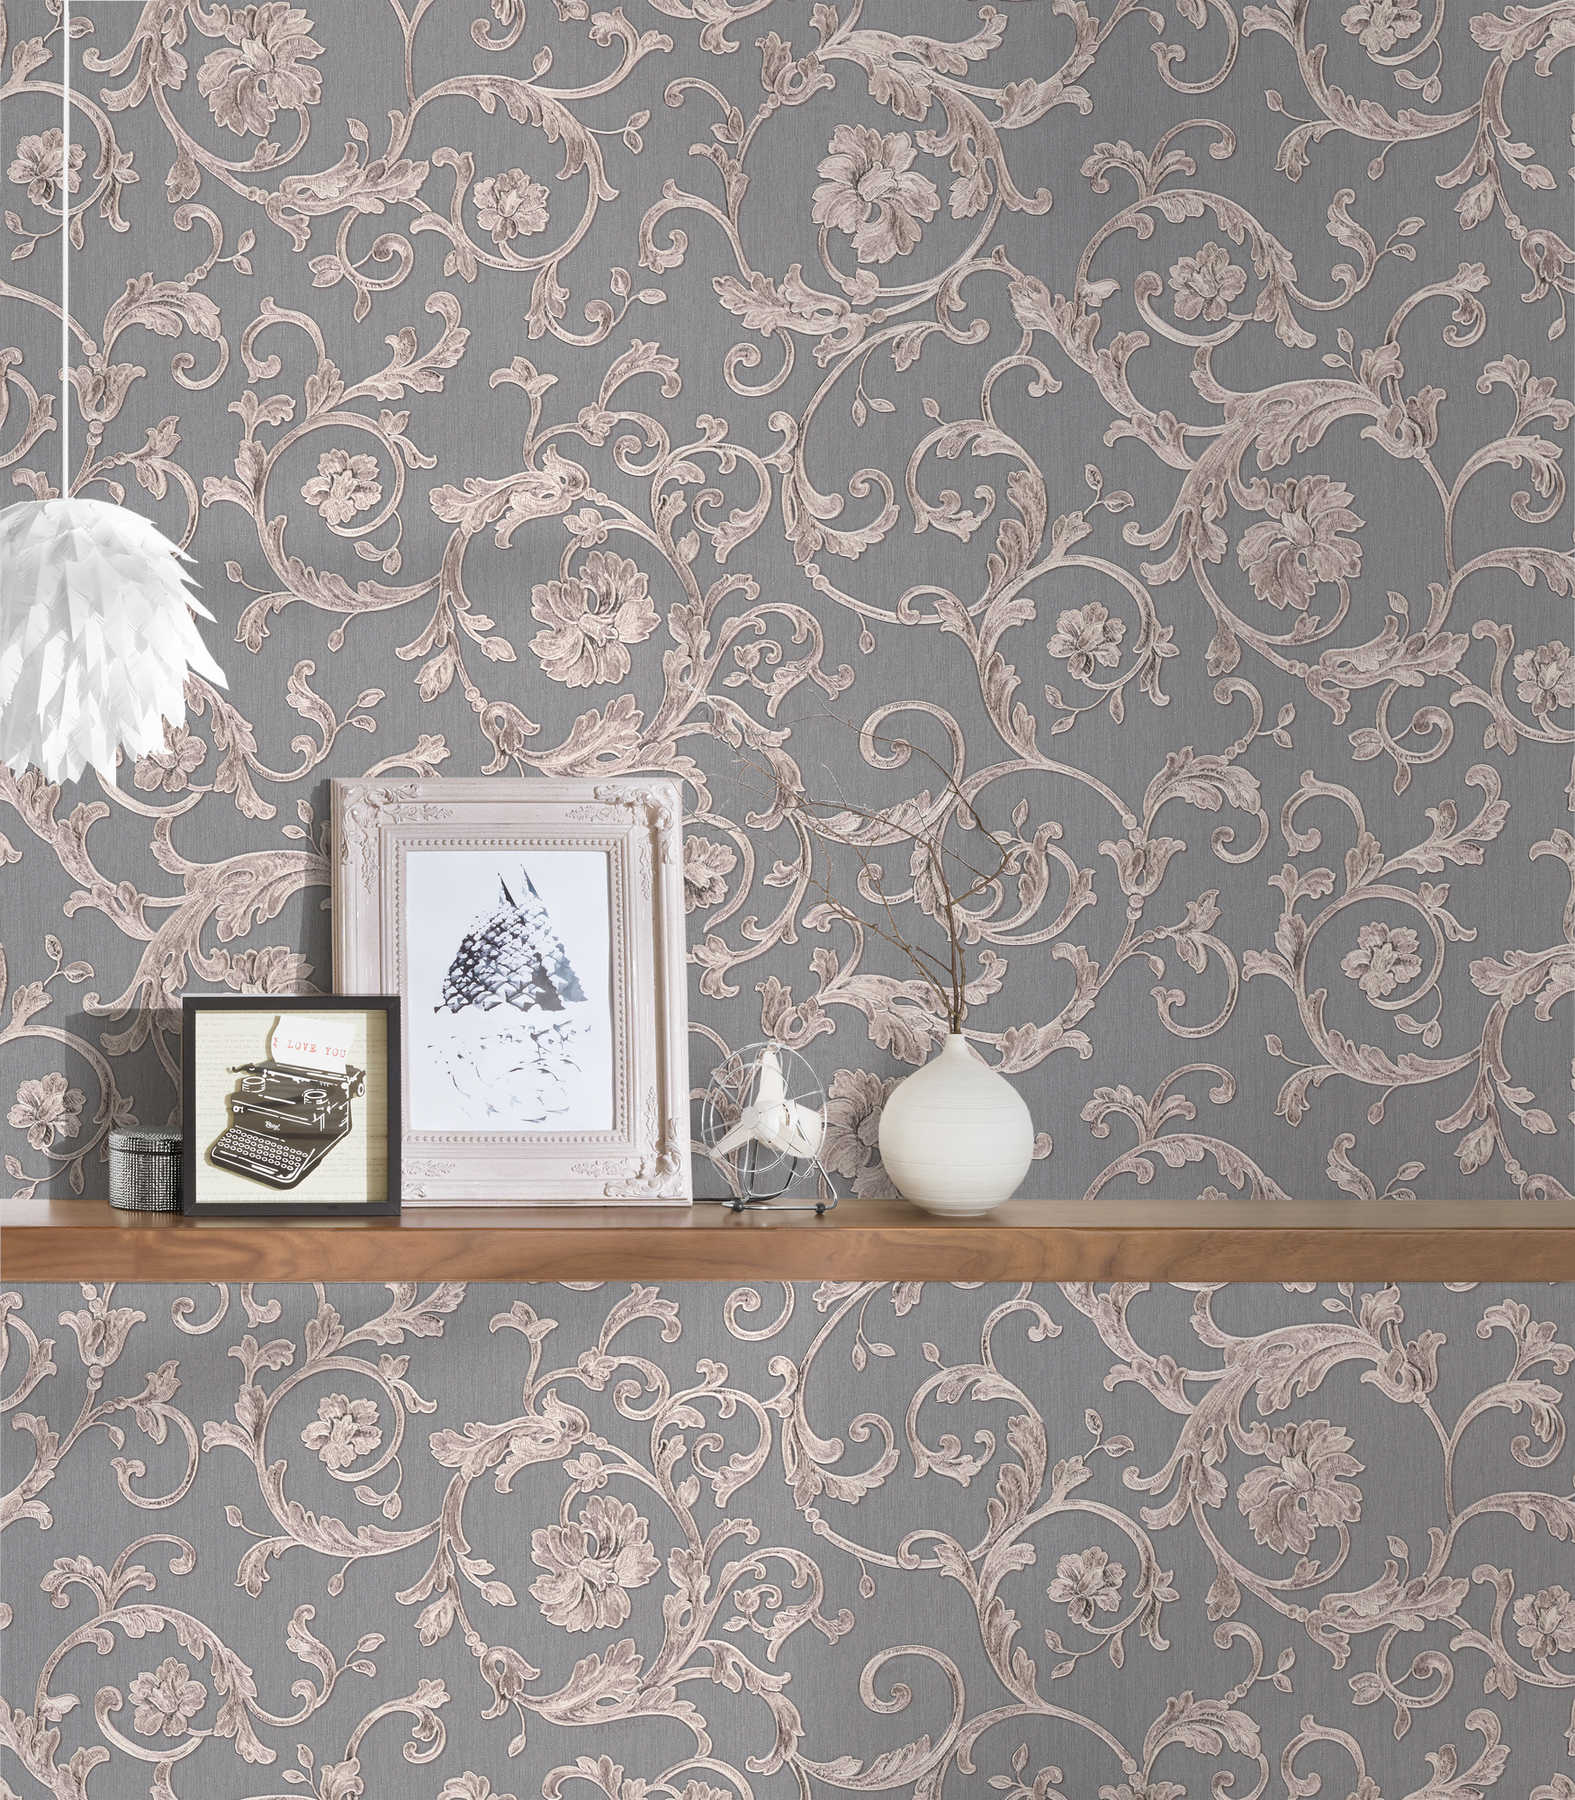             VERSACE wallpaper with ornamental pattern - grey, metallic
        